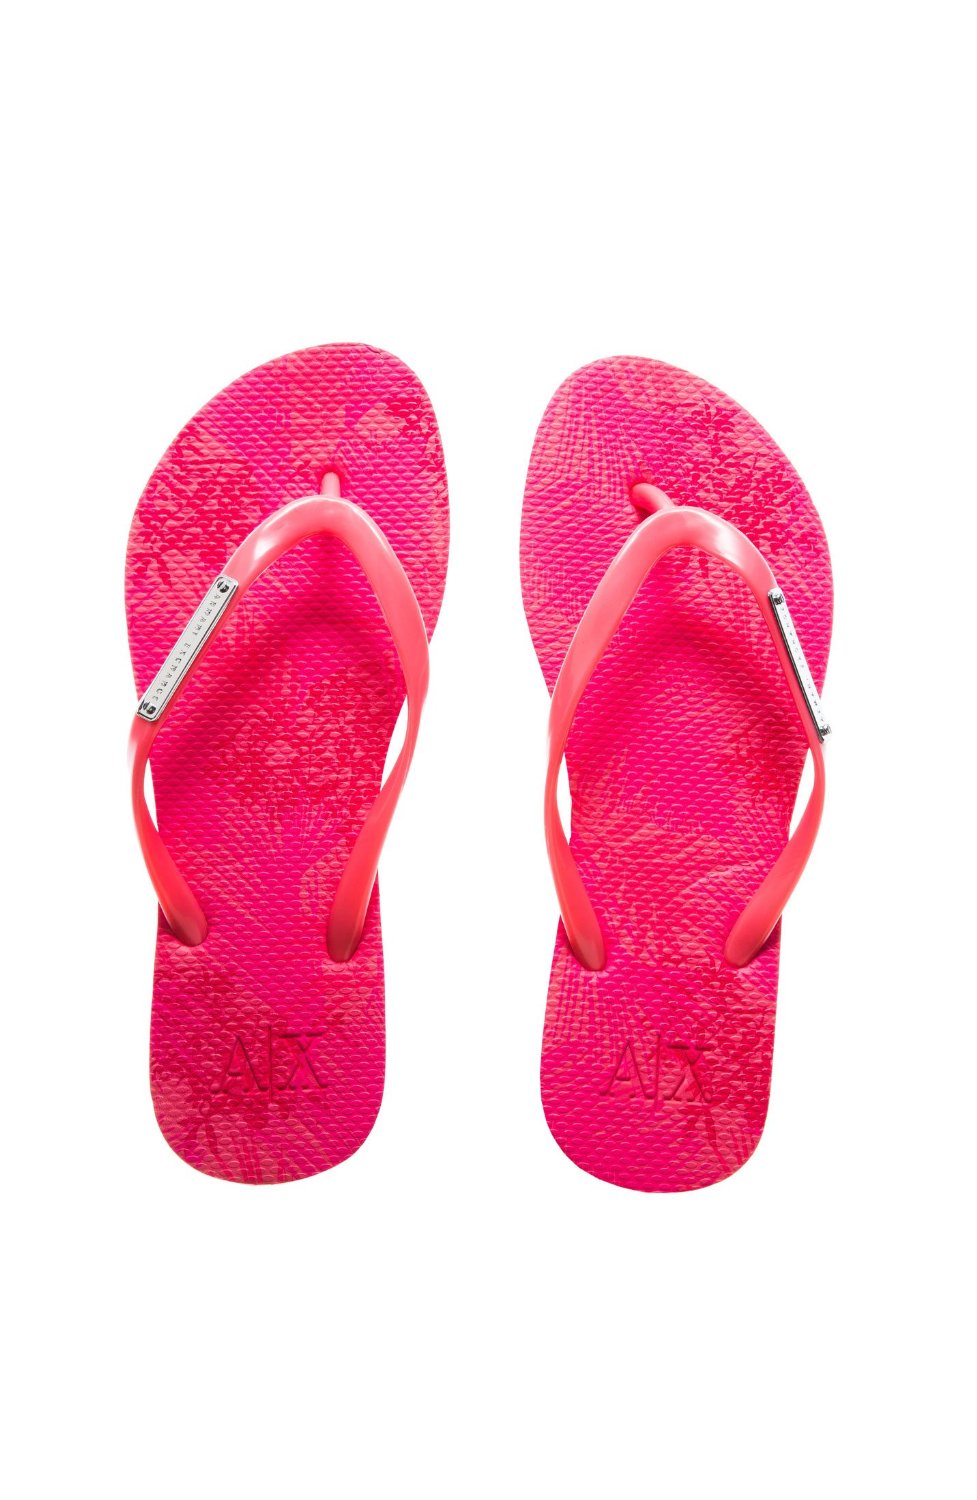 Armani Exchange A|X Tropical Flip Flop - Medium Pink — Armani Shoes